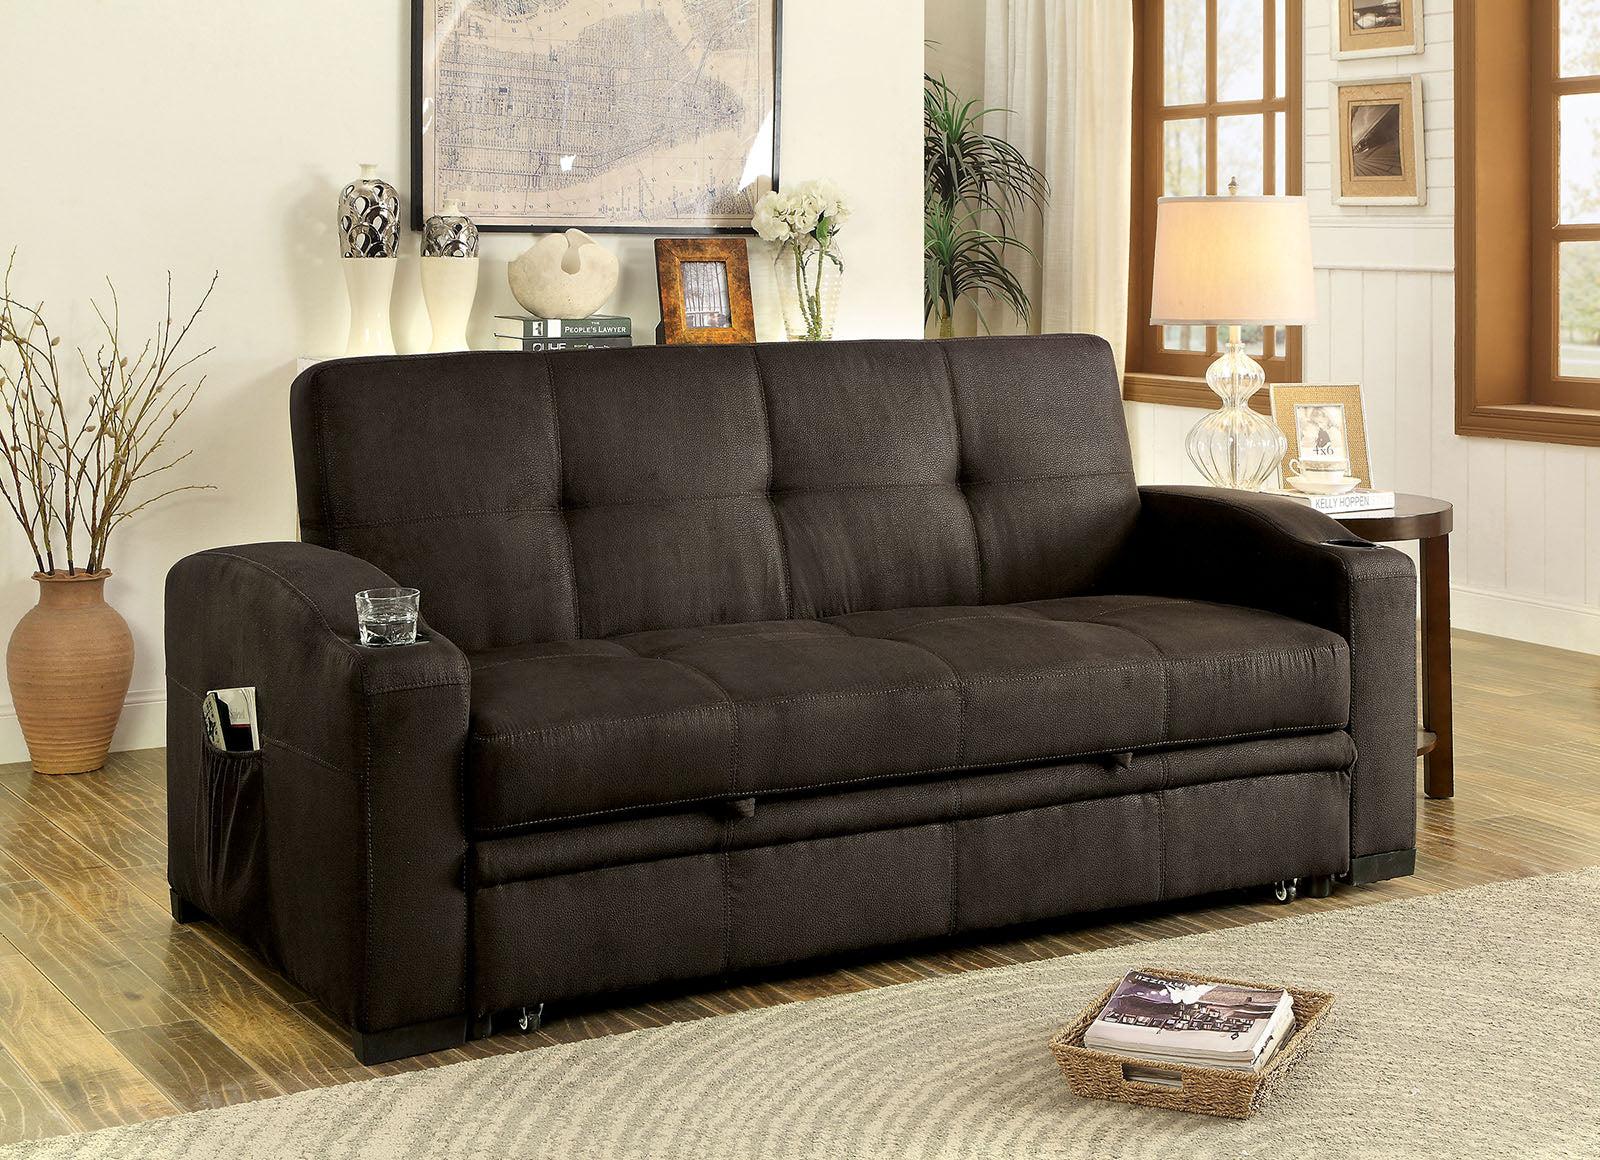 Transitional Futon sofa CM2691 Mavis CM2691 in Dark Brown Fabric